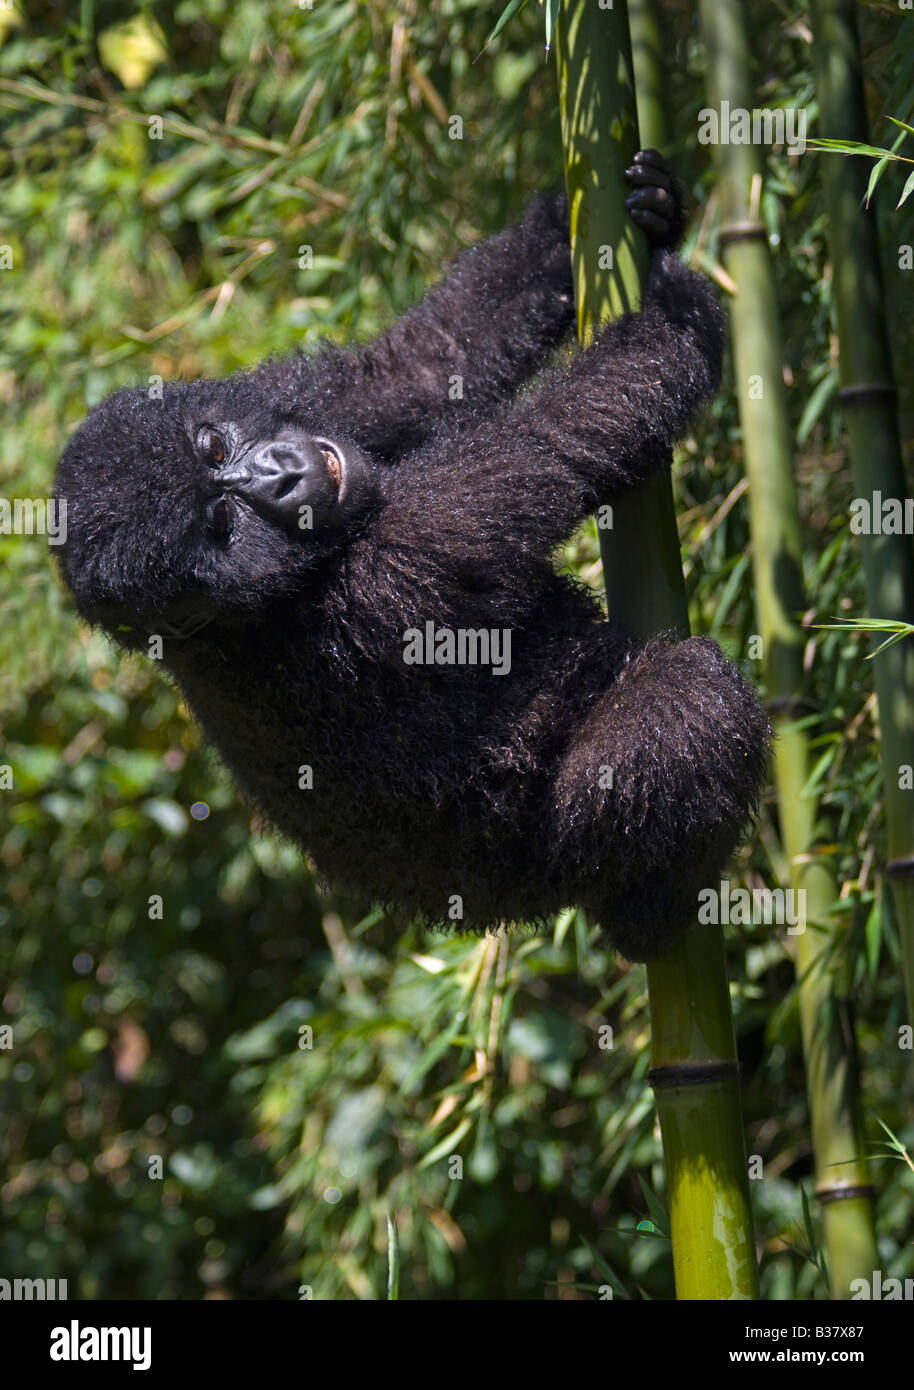 A baby MOUNTAIN GORILLA Gorilla beringei beringei climbs bamboo in PARK NATIONAL DE VOLCANS or VOLCANOES NATIONAL PARK RWANDA Stock Photo